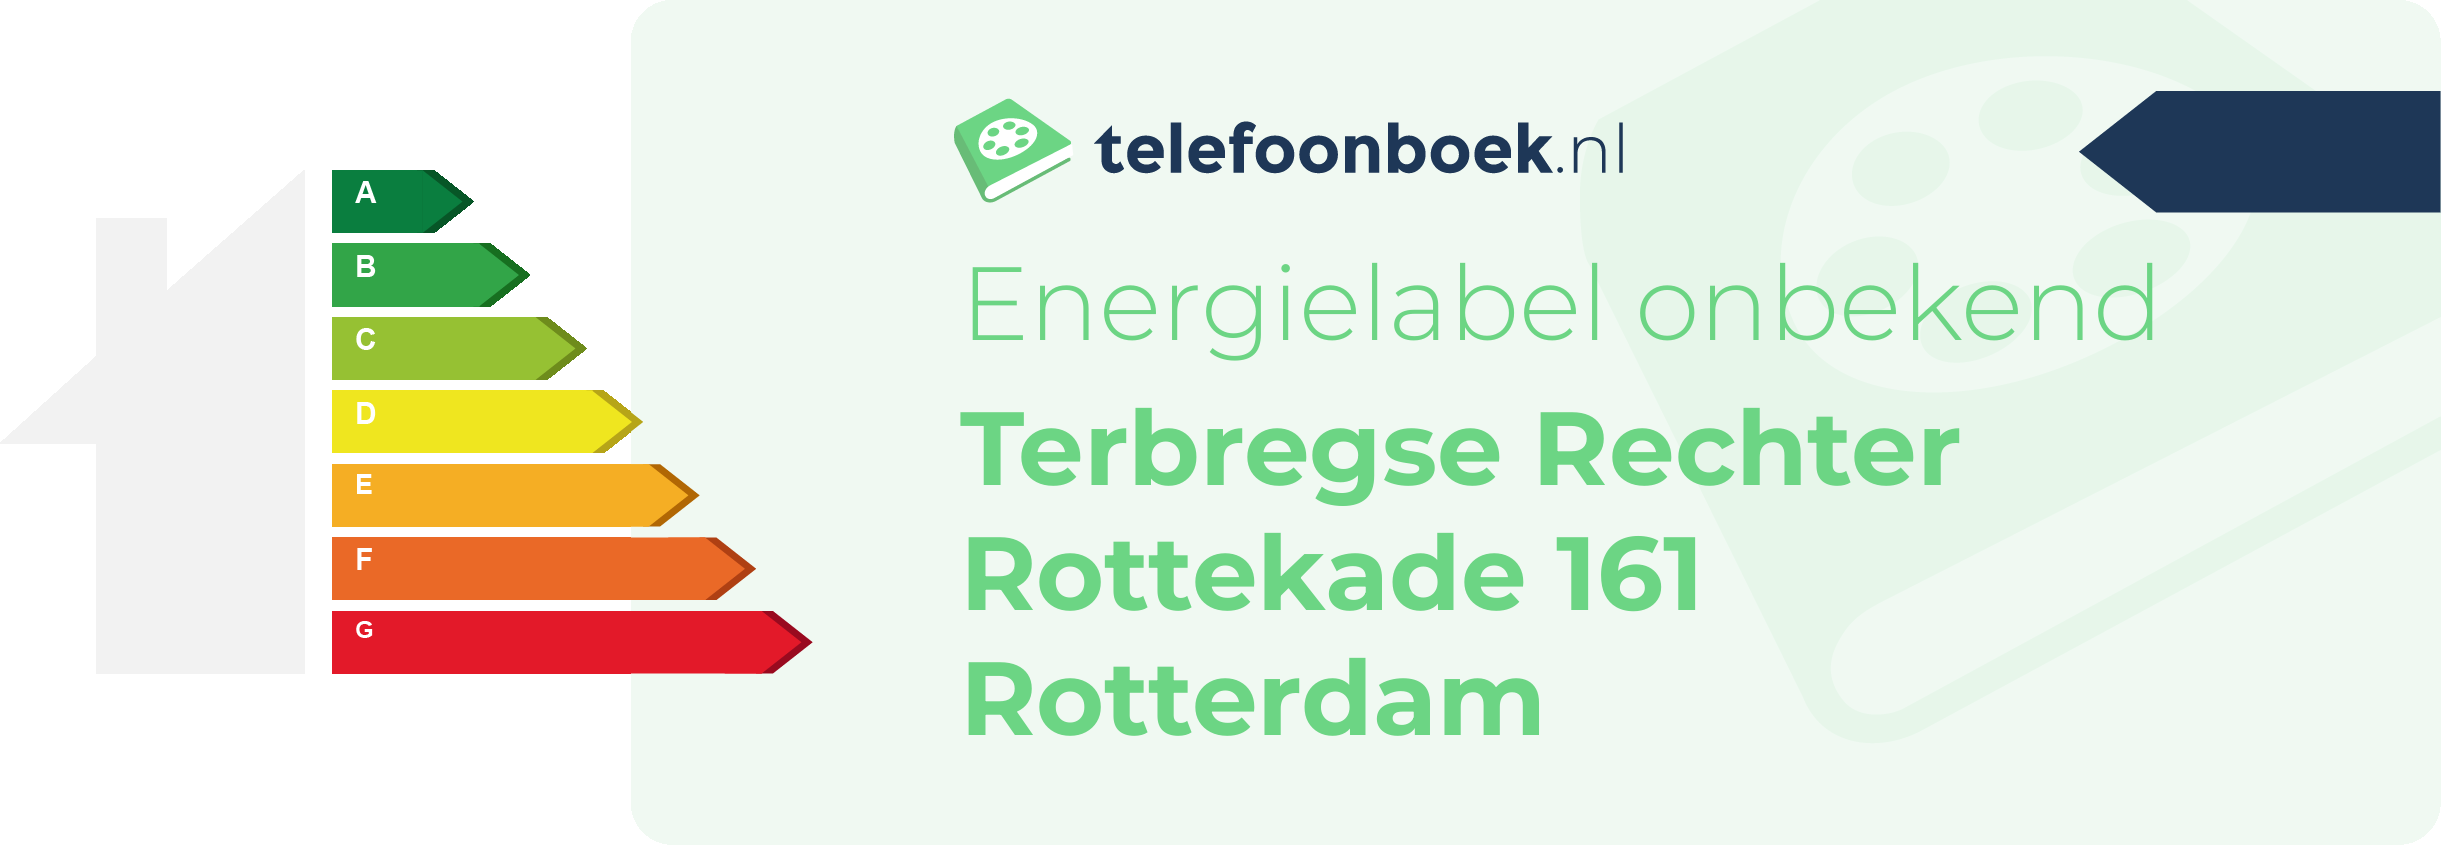 Energielabel Terbregse Rechter Rottekade 161 Rotterdam